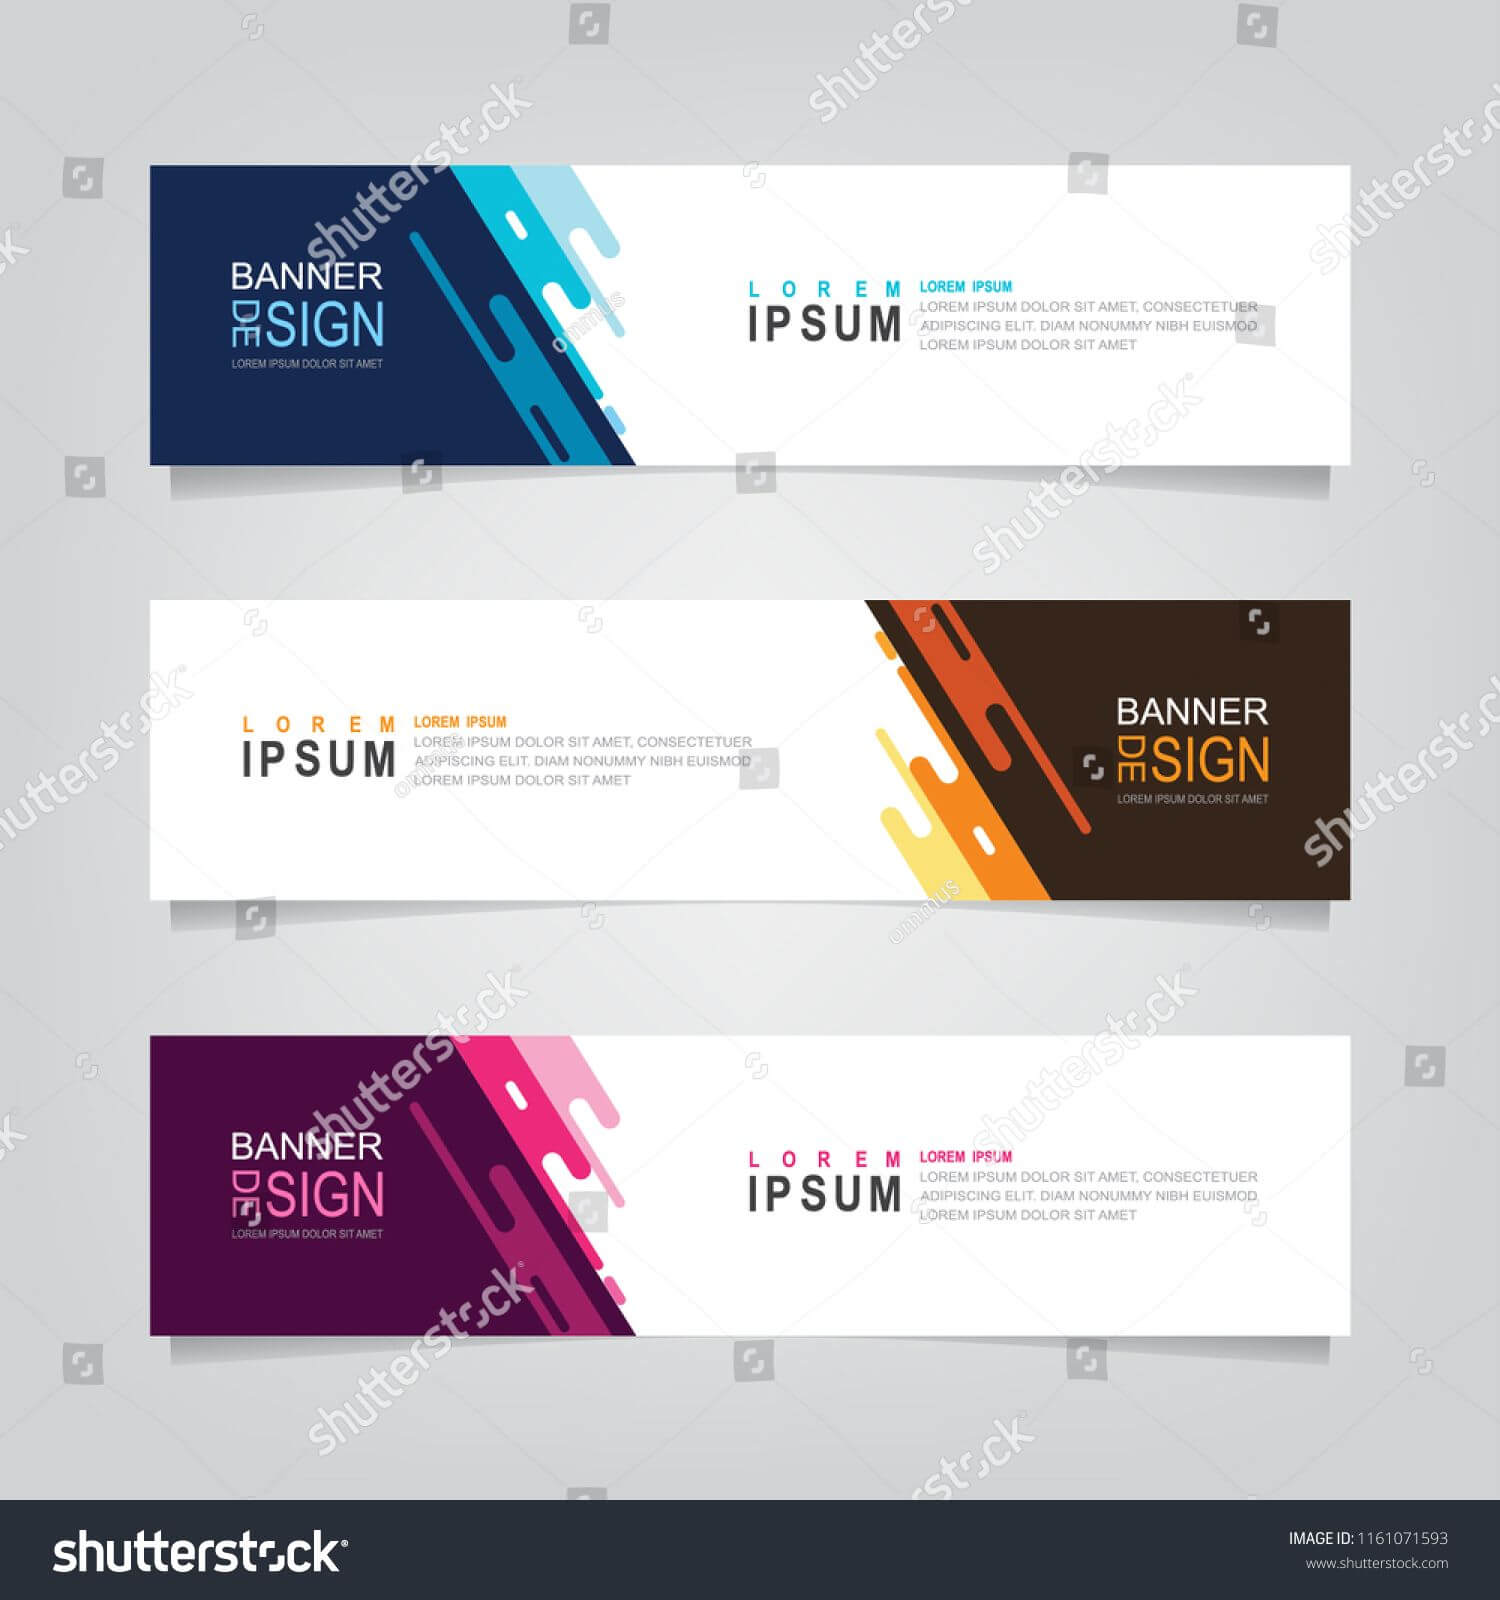 Vector Abstract Web Banner Design Template. Collection Of Regarding Website Banner Design Templates